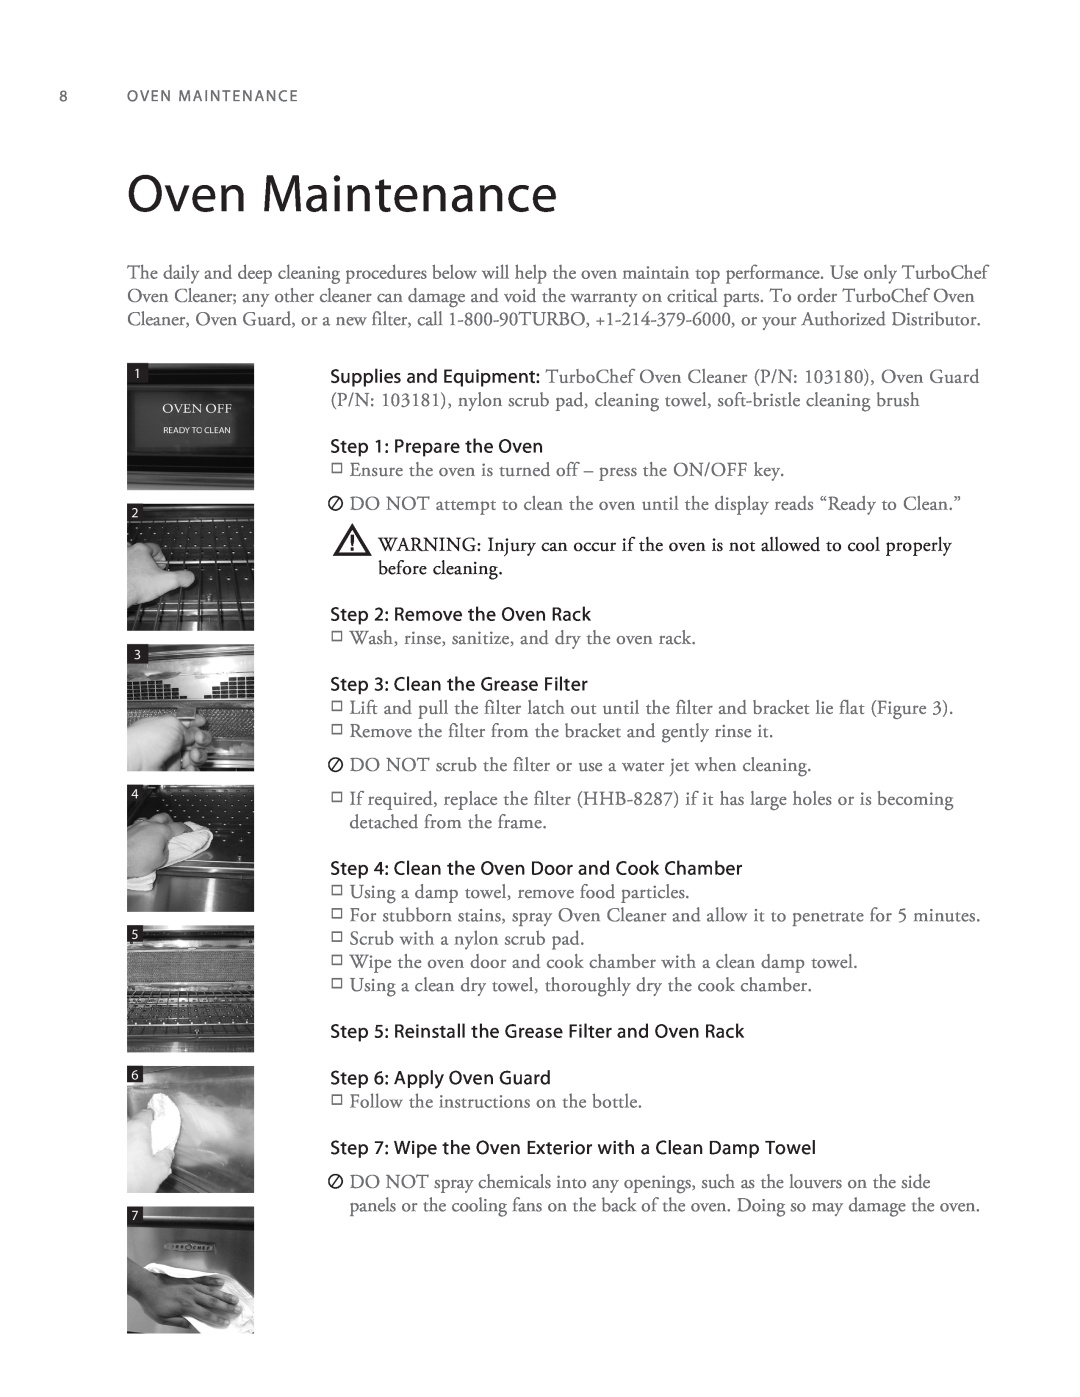 Turbo Chef Technologies 2TM manual Oven Maintenance 